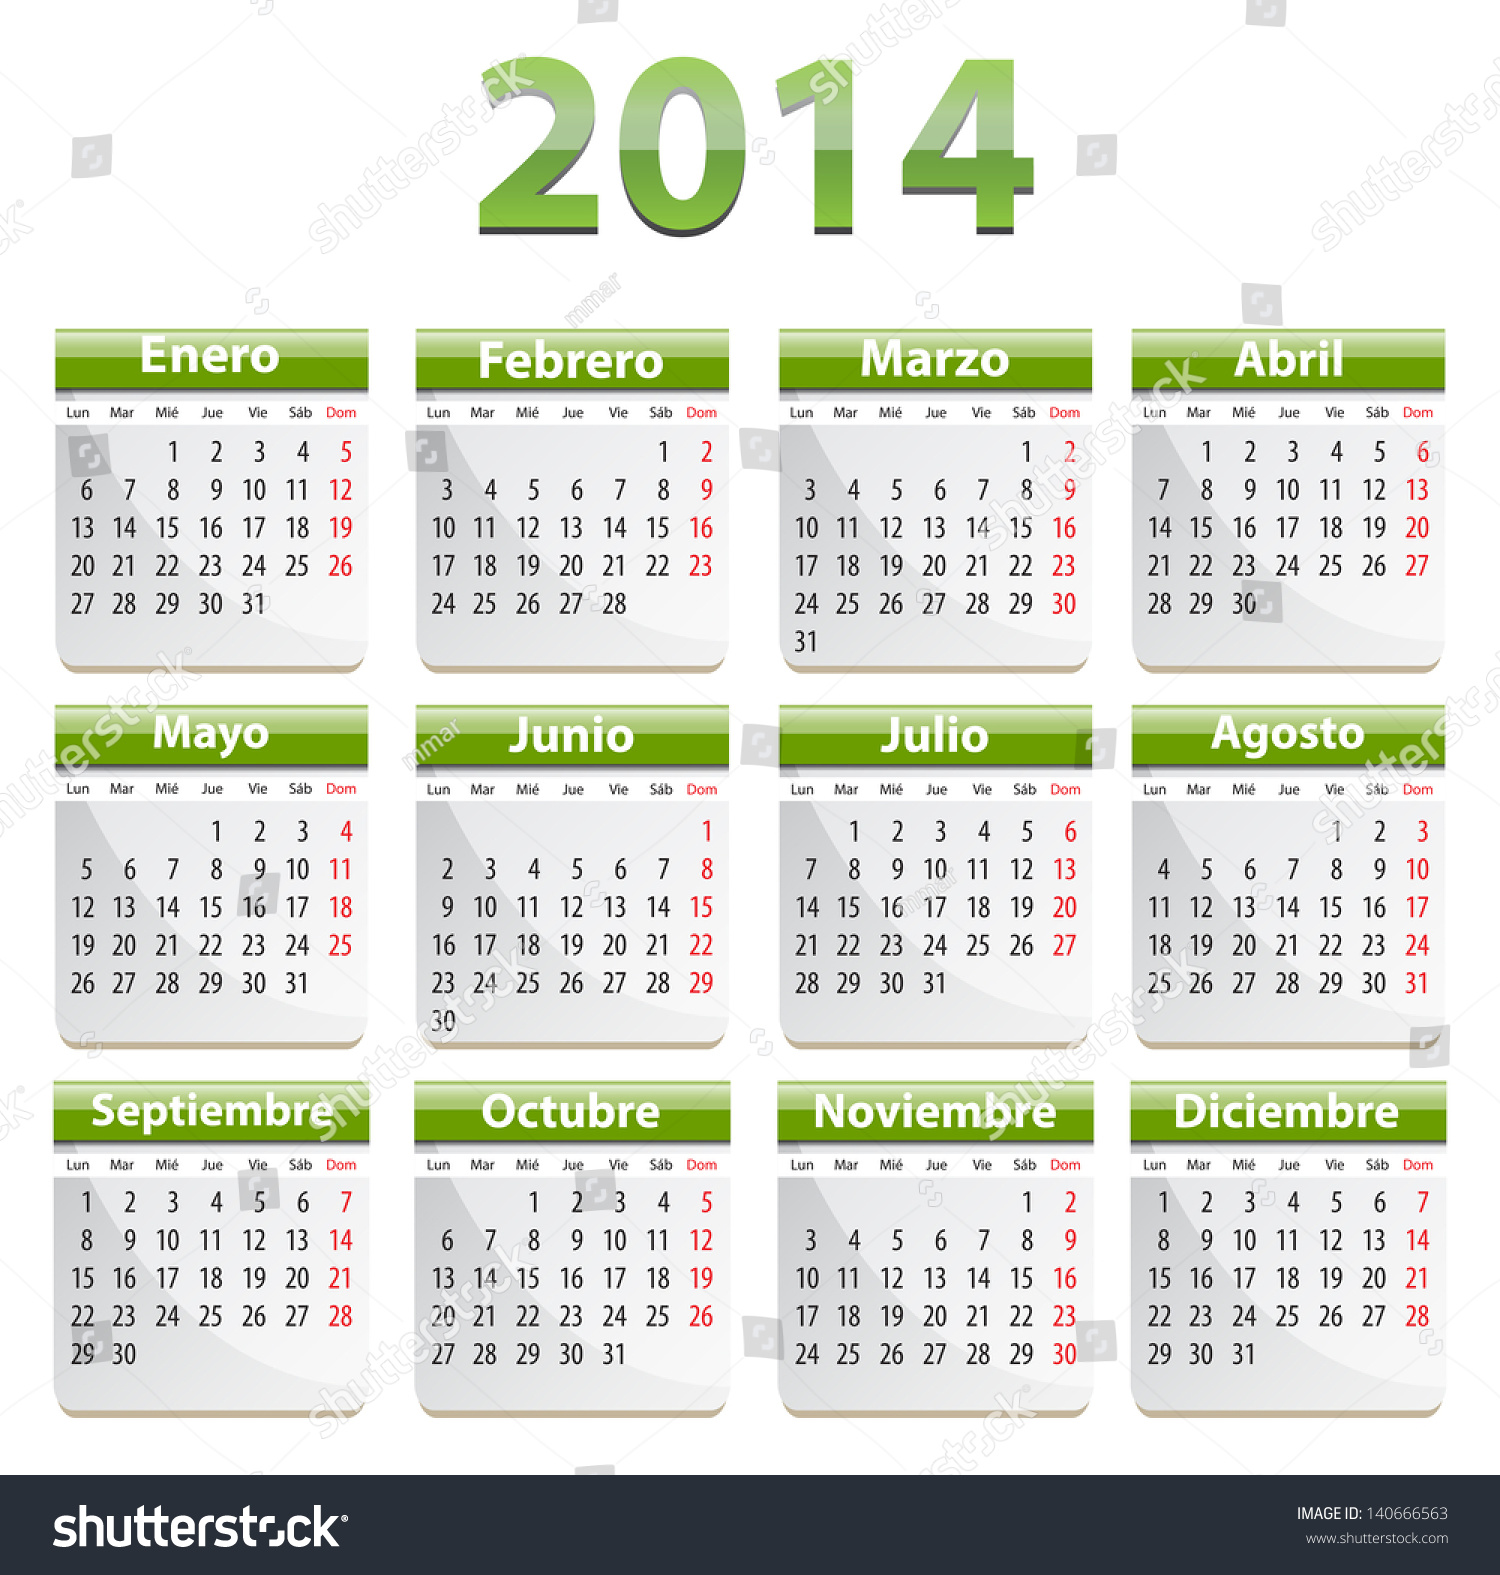 Free Download Islamic Calendar Gadget For Windows 7